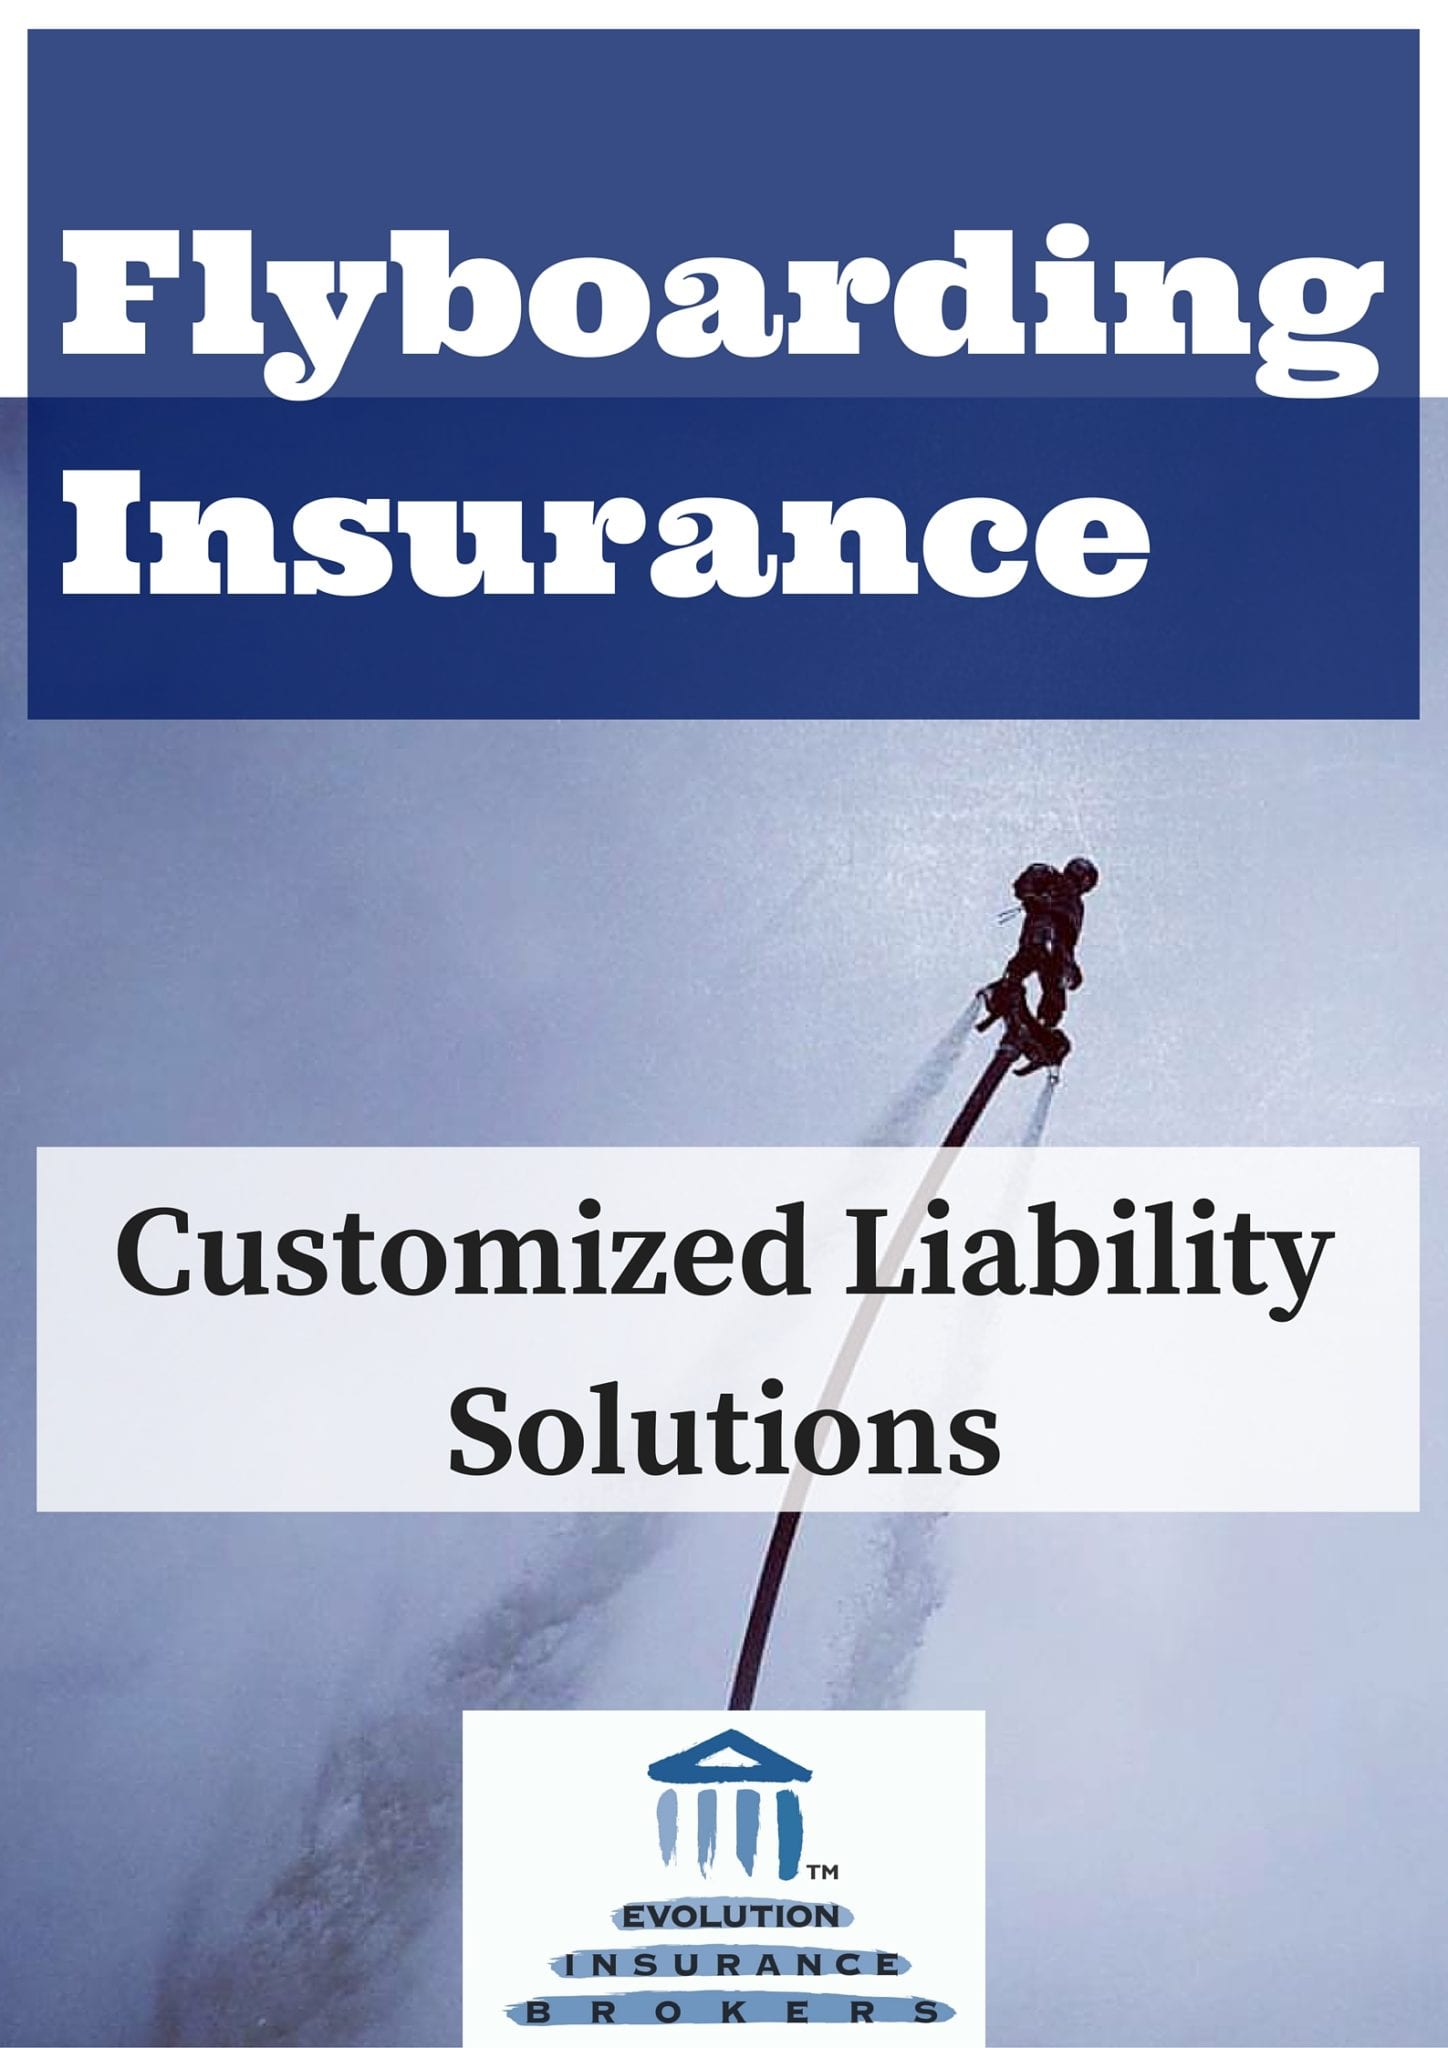 flyboarding-insurance-evolution-insurance-brokers